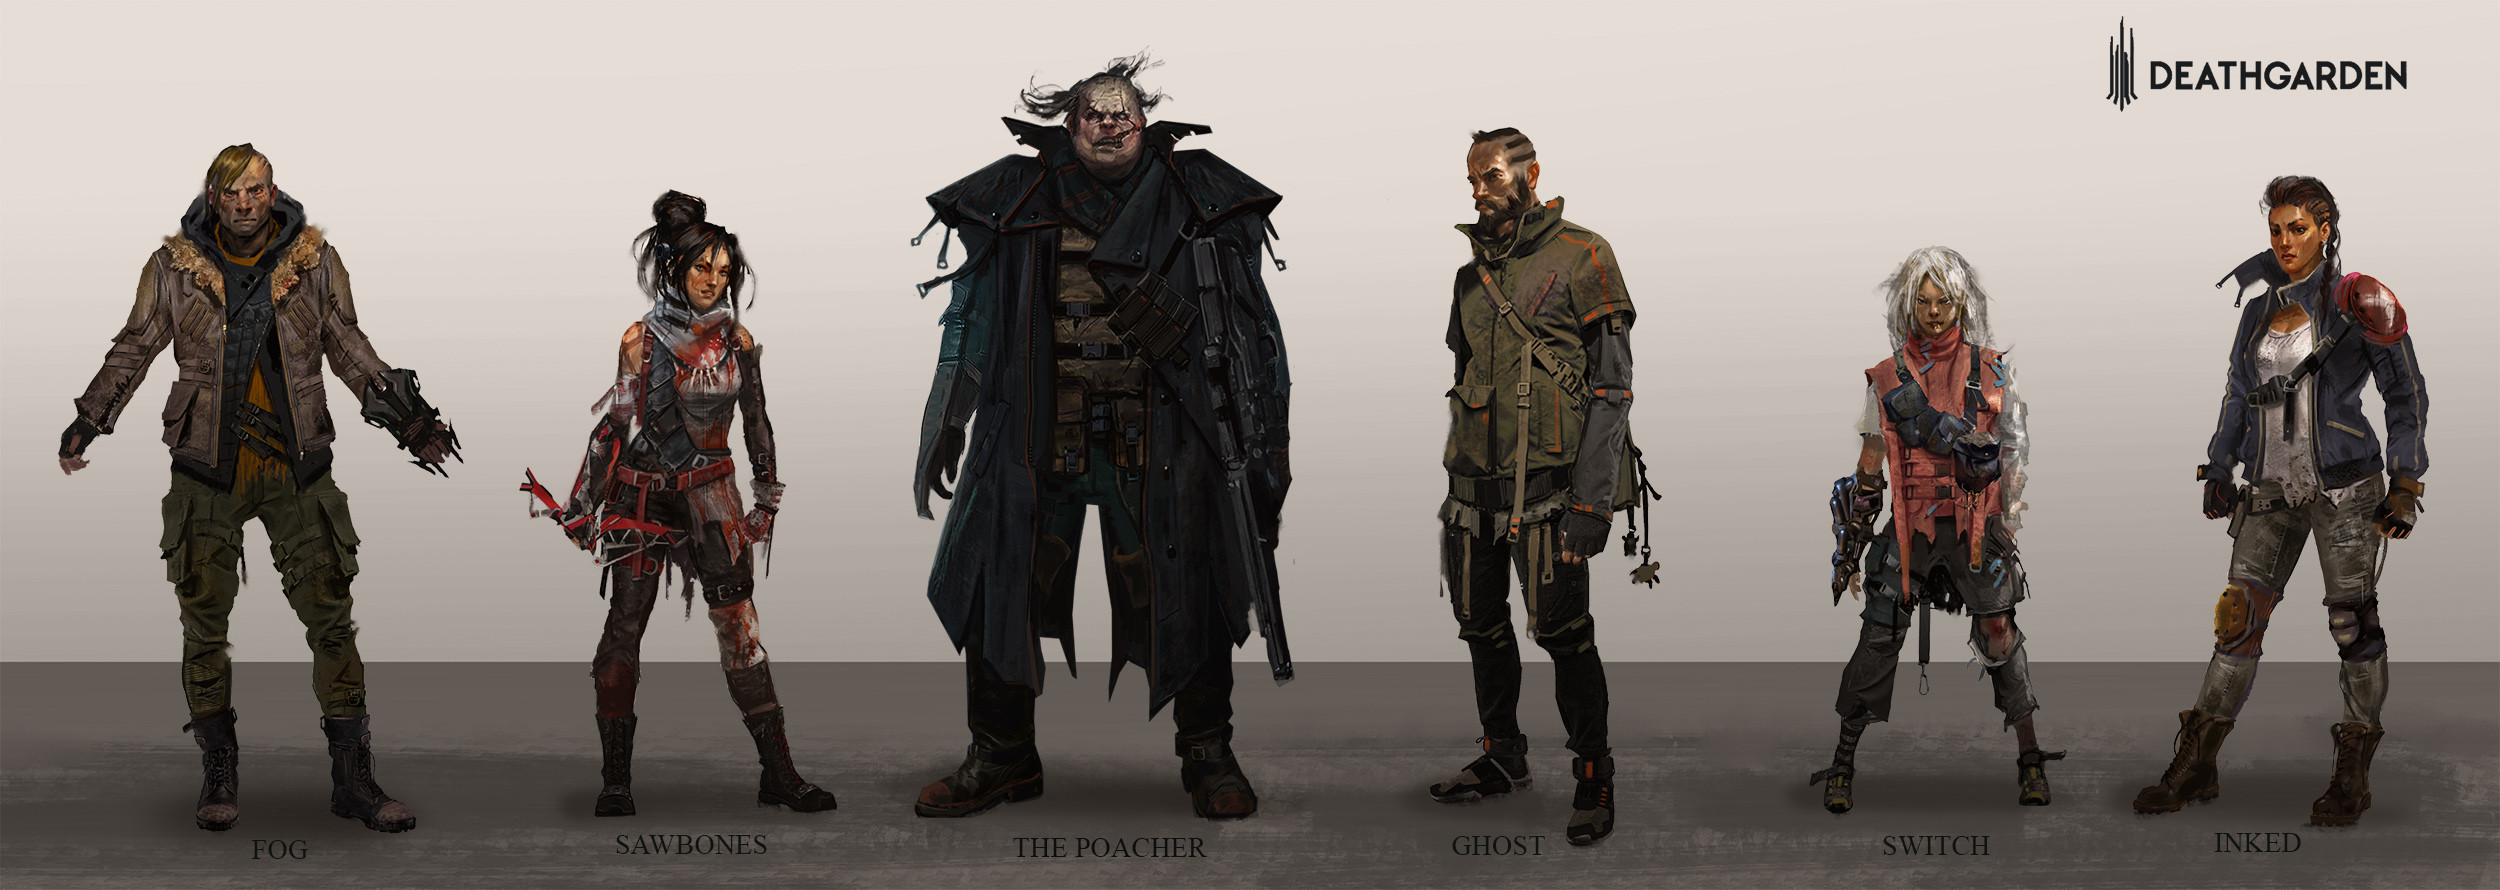 DeathGarden character concepts